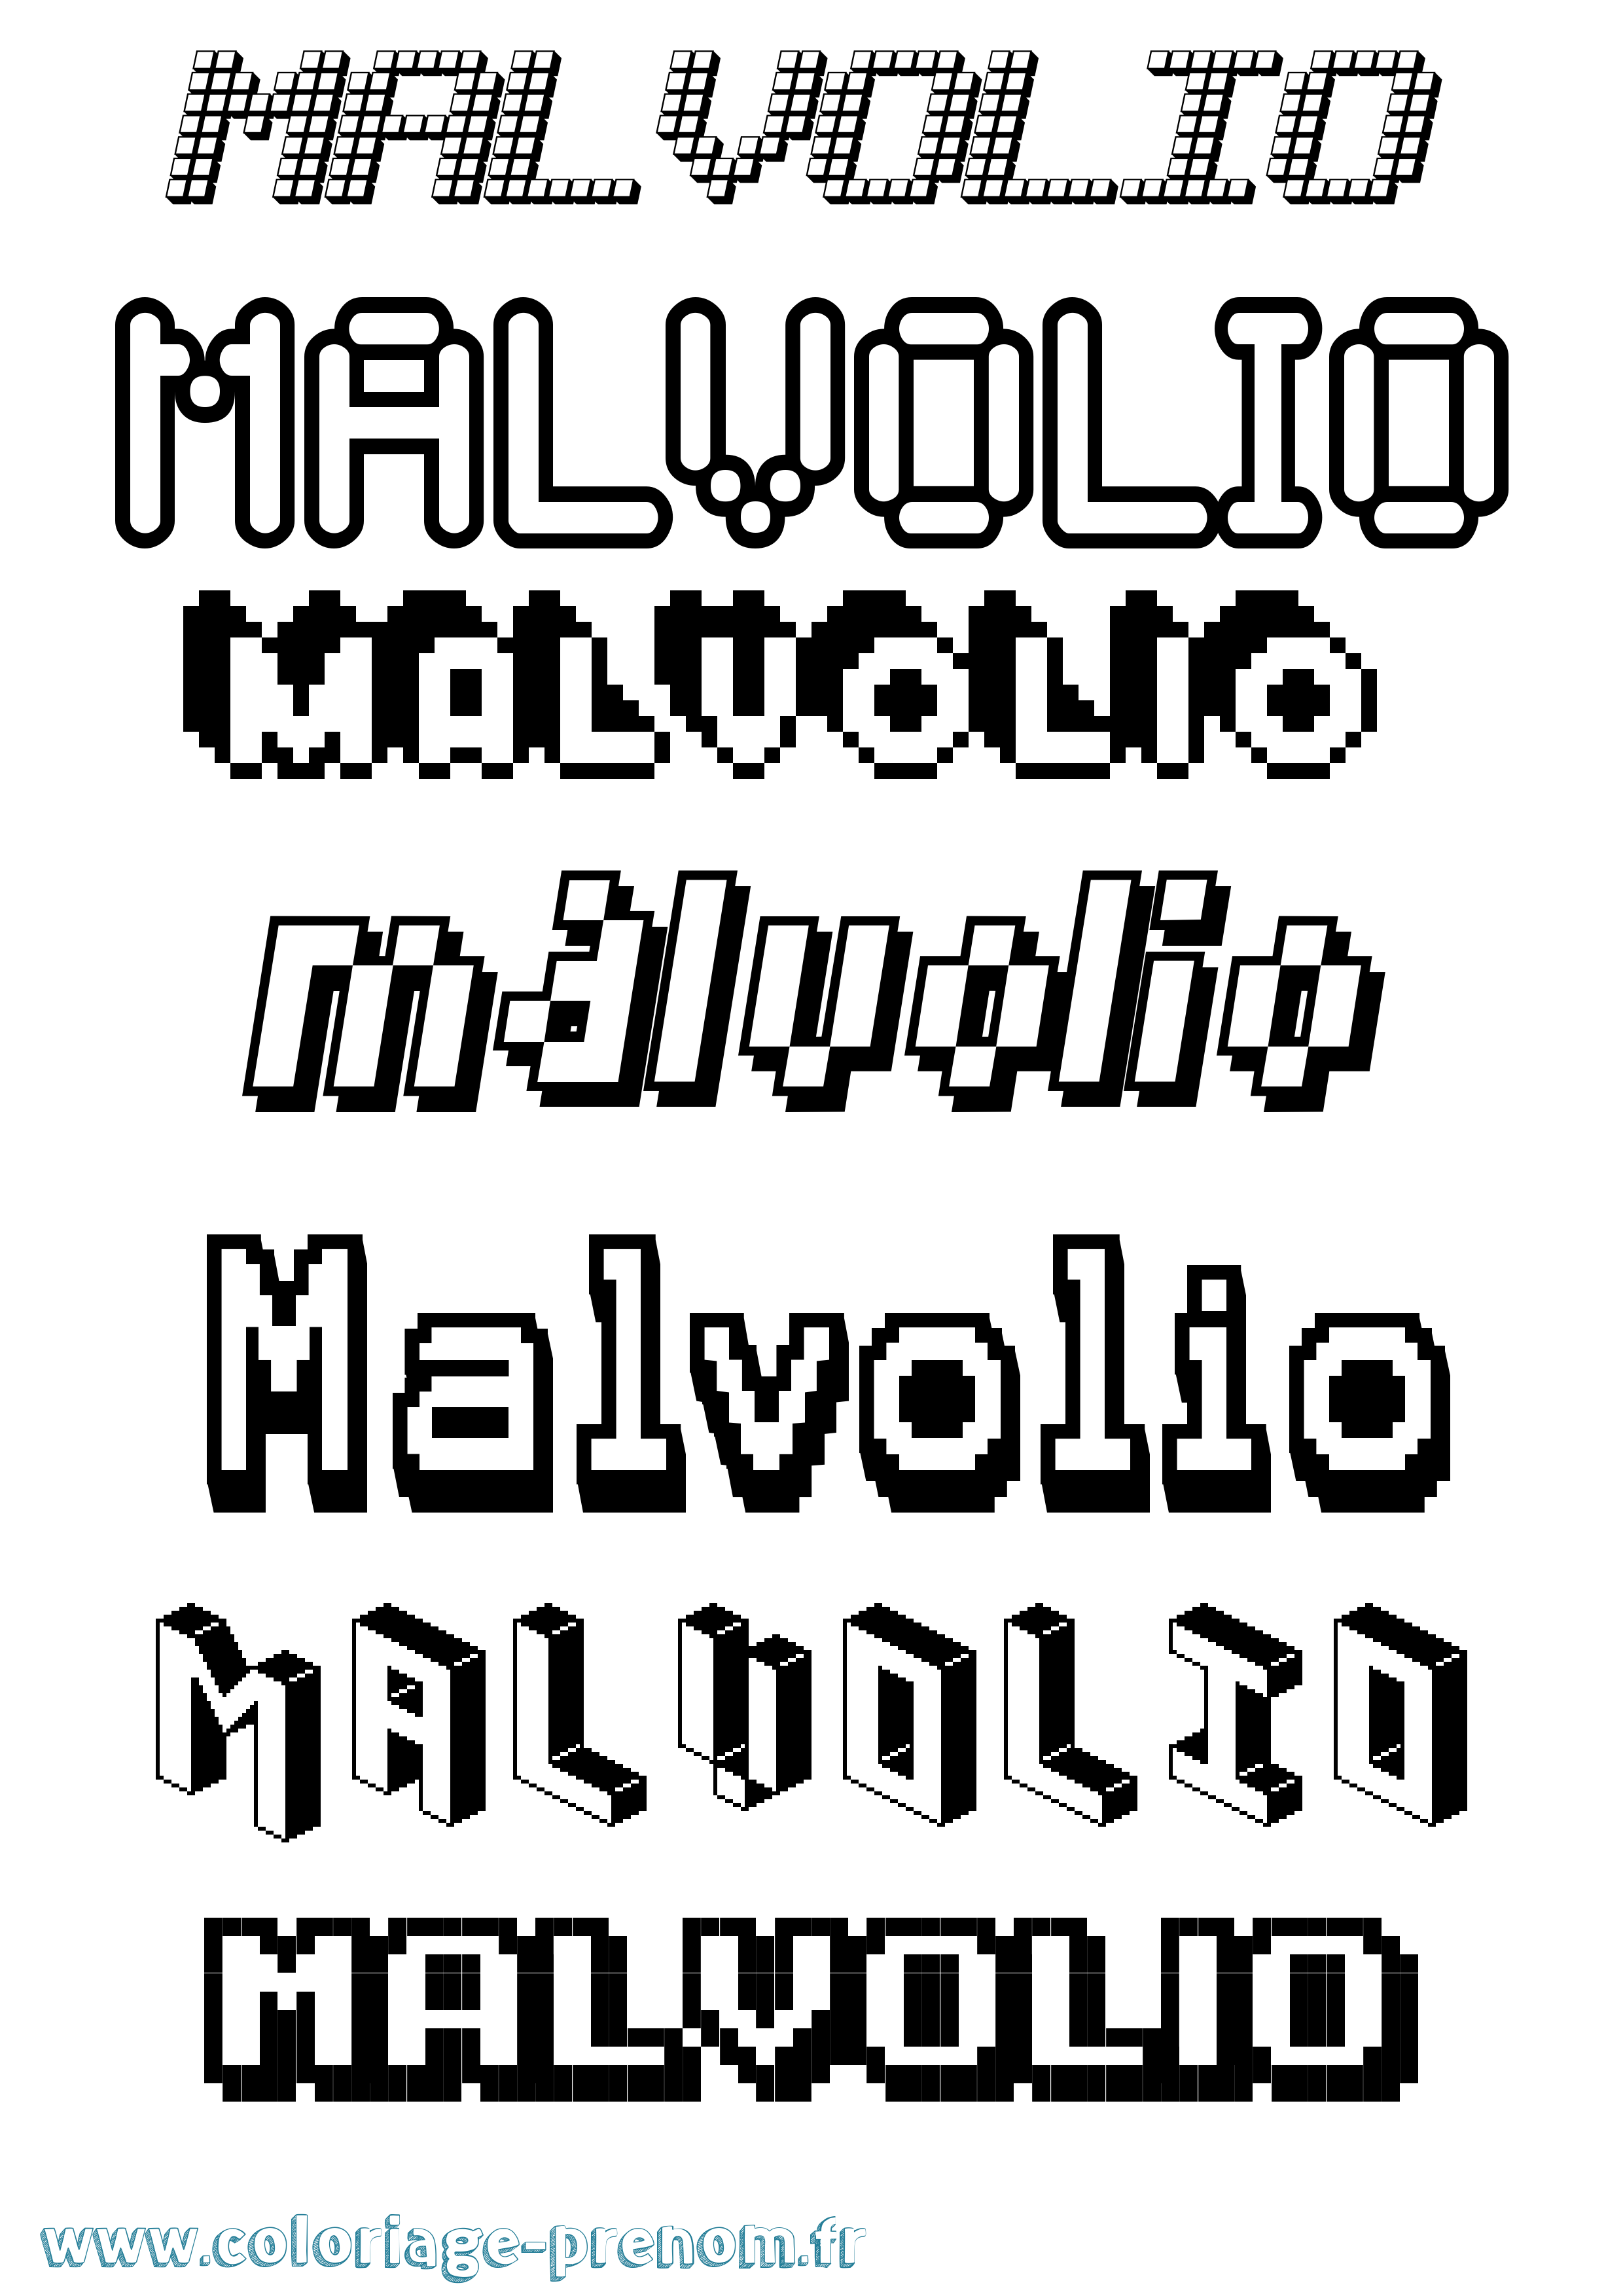 Coloriage prénom Malvolio Pixel